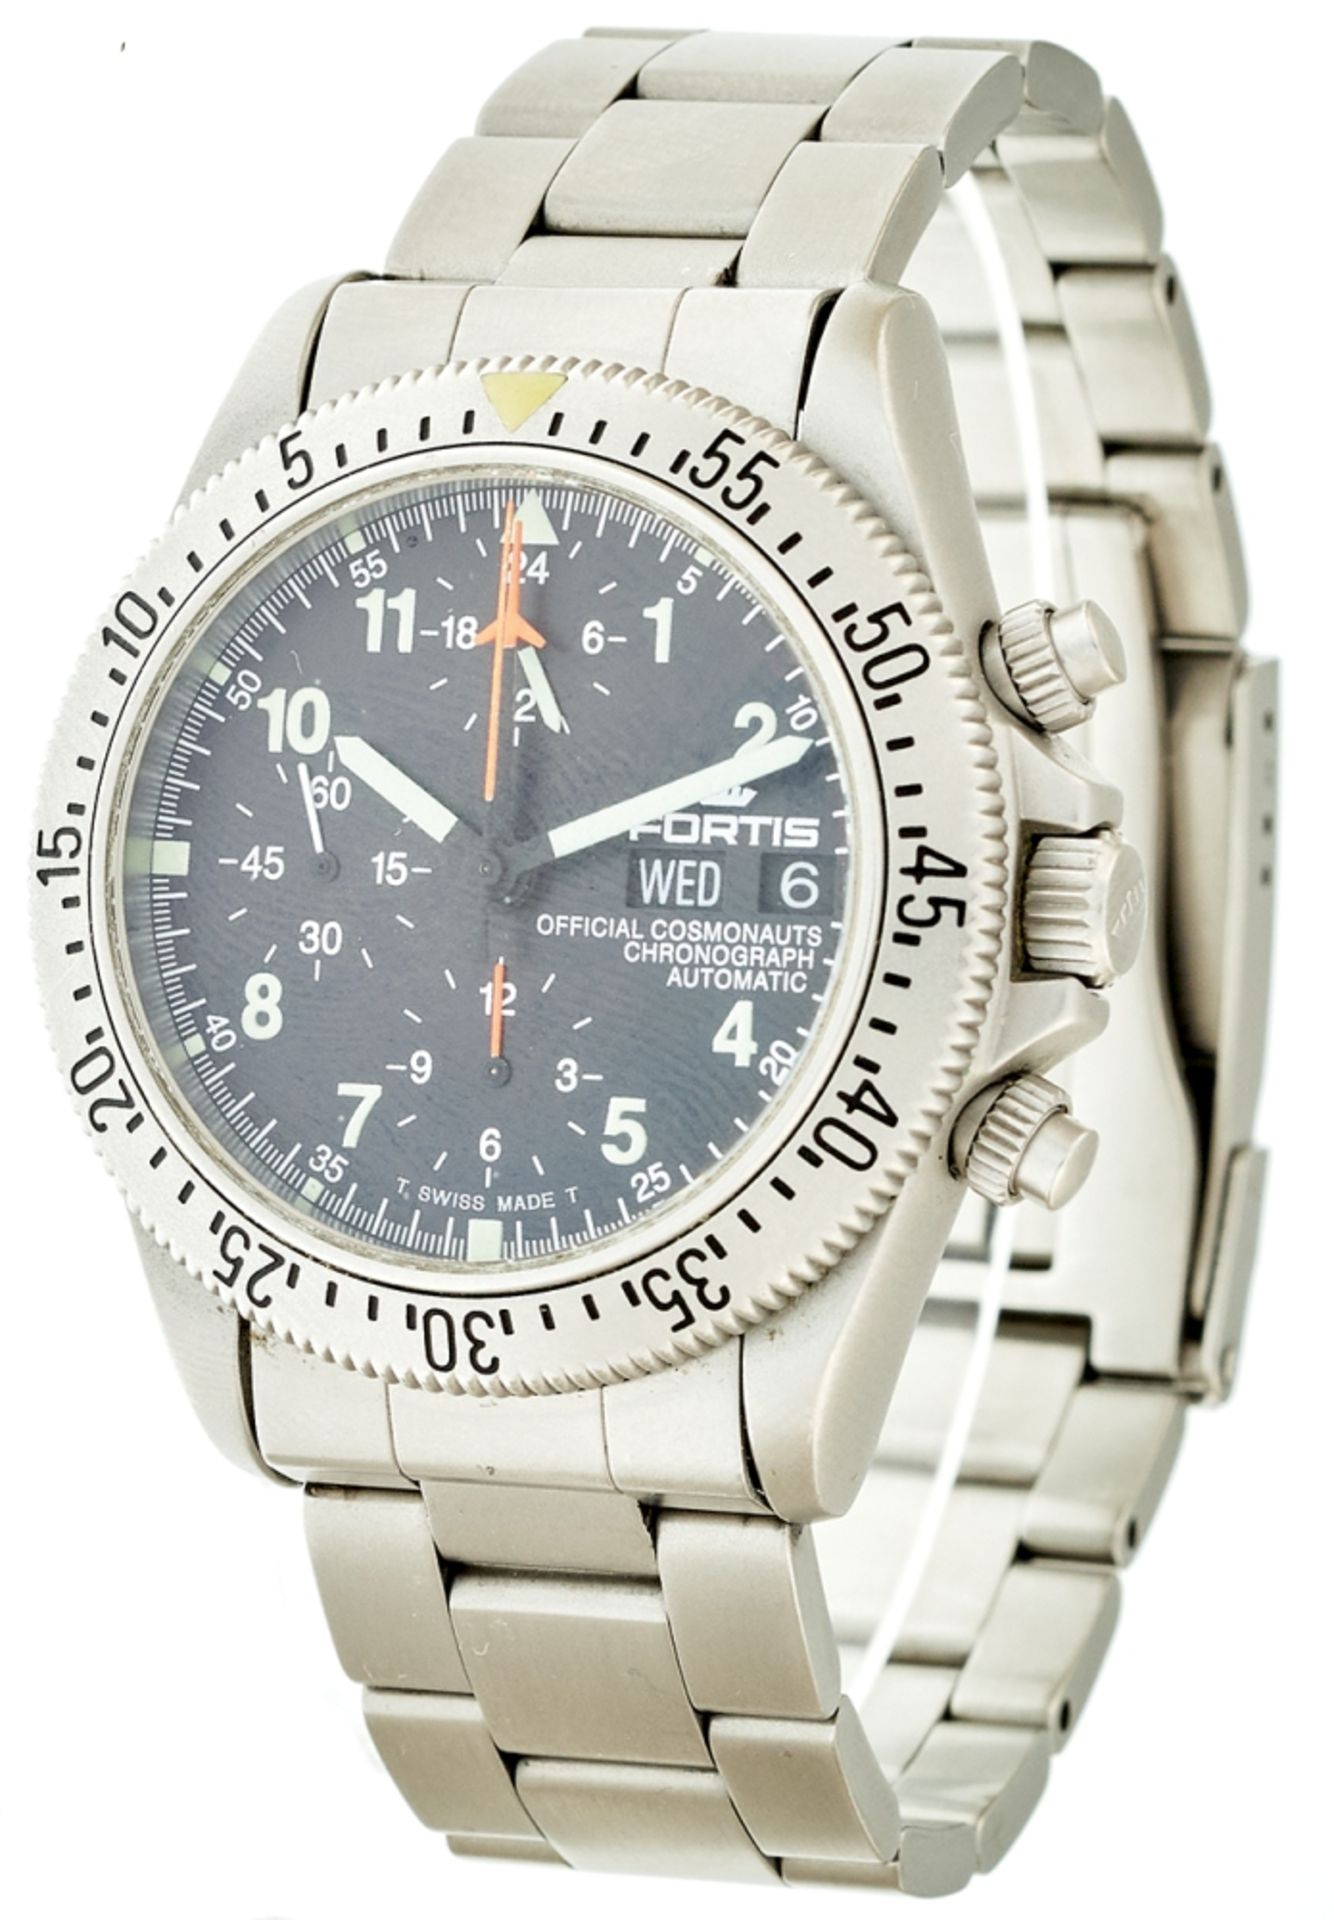 Fortis Cosmonauts chronograph gentlemen wrist watch. Ca. 38 mm, high-grade steel, automatic, Re.